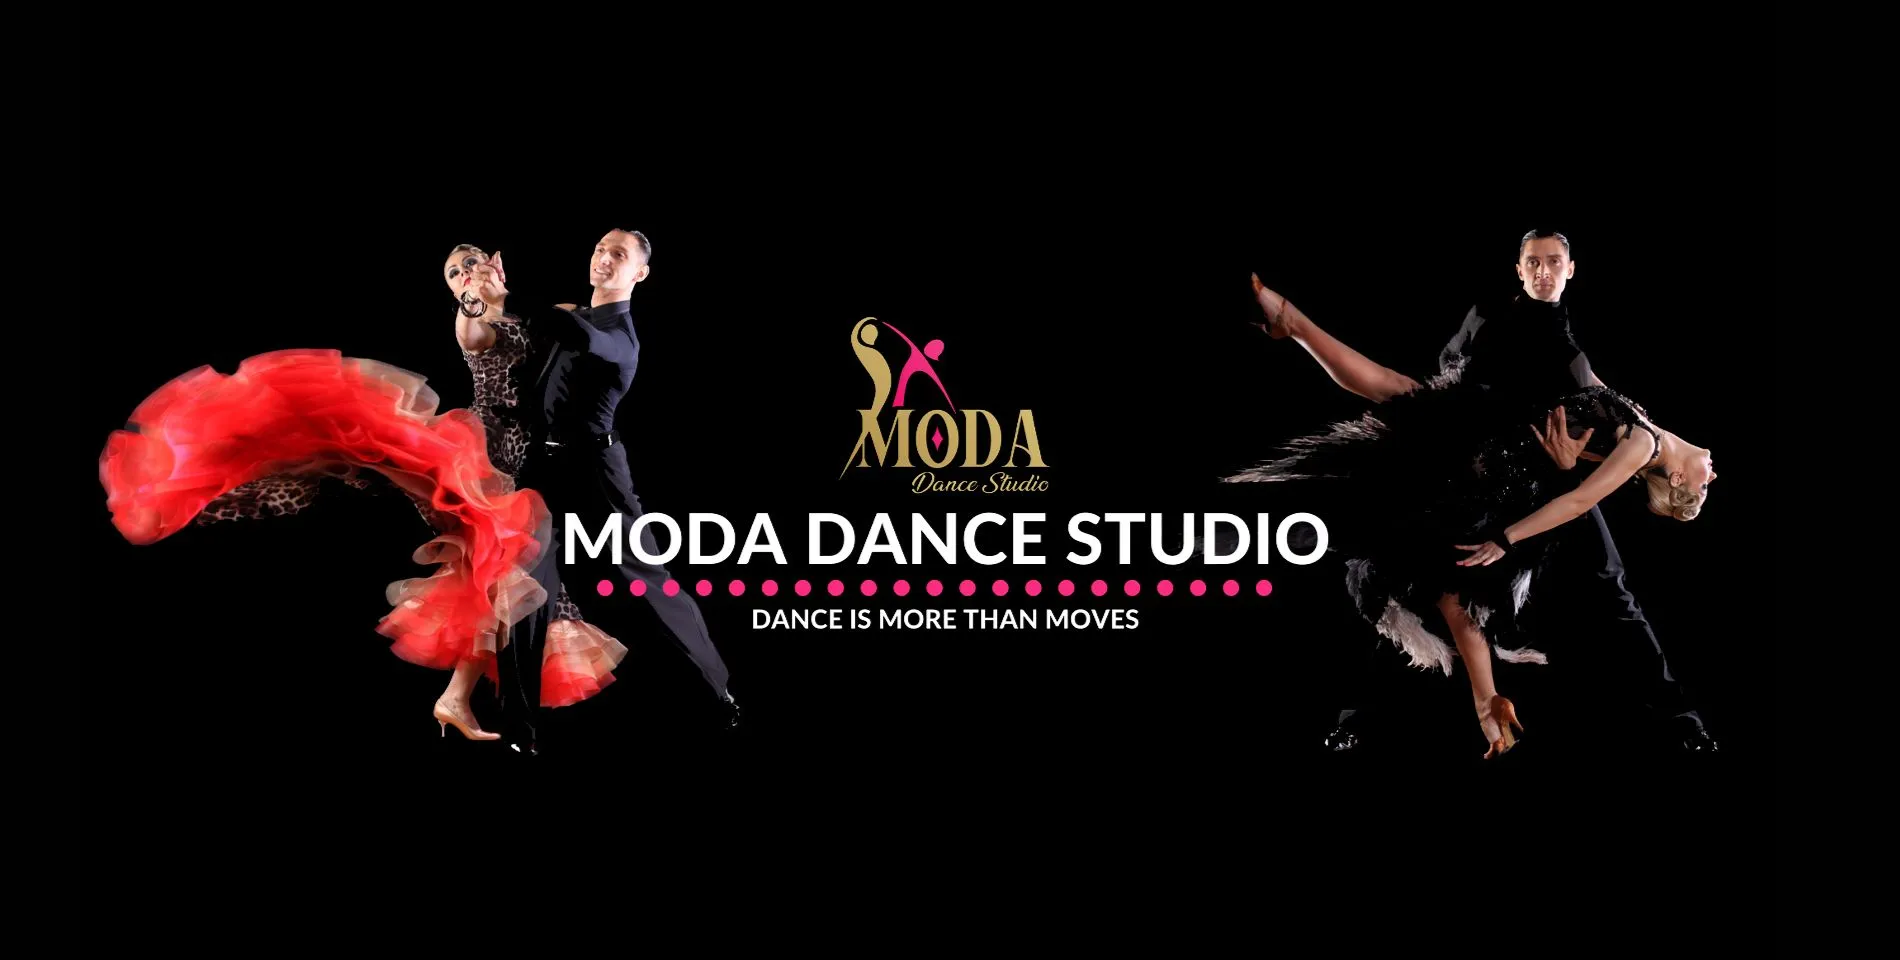 Dance Studio Bangkok, เปิดฟลอร์งานแต่ง,  คลาสเรียนเต้น | Moda dance studio 